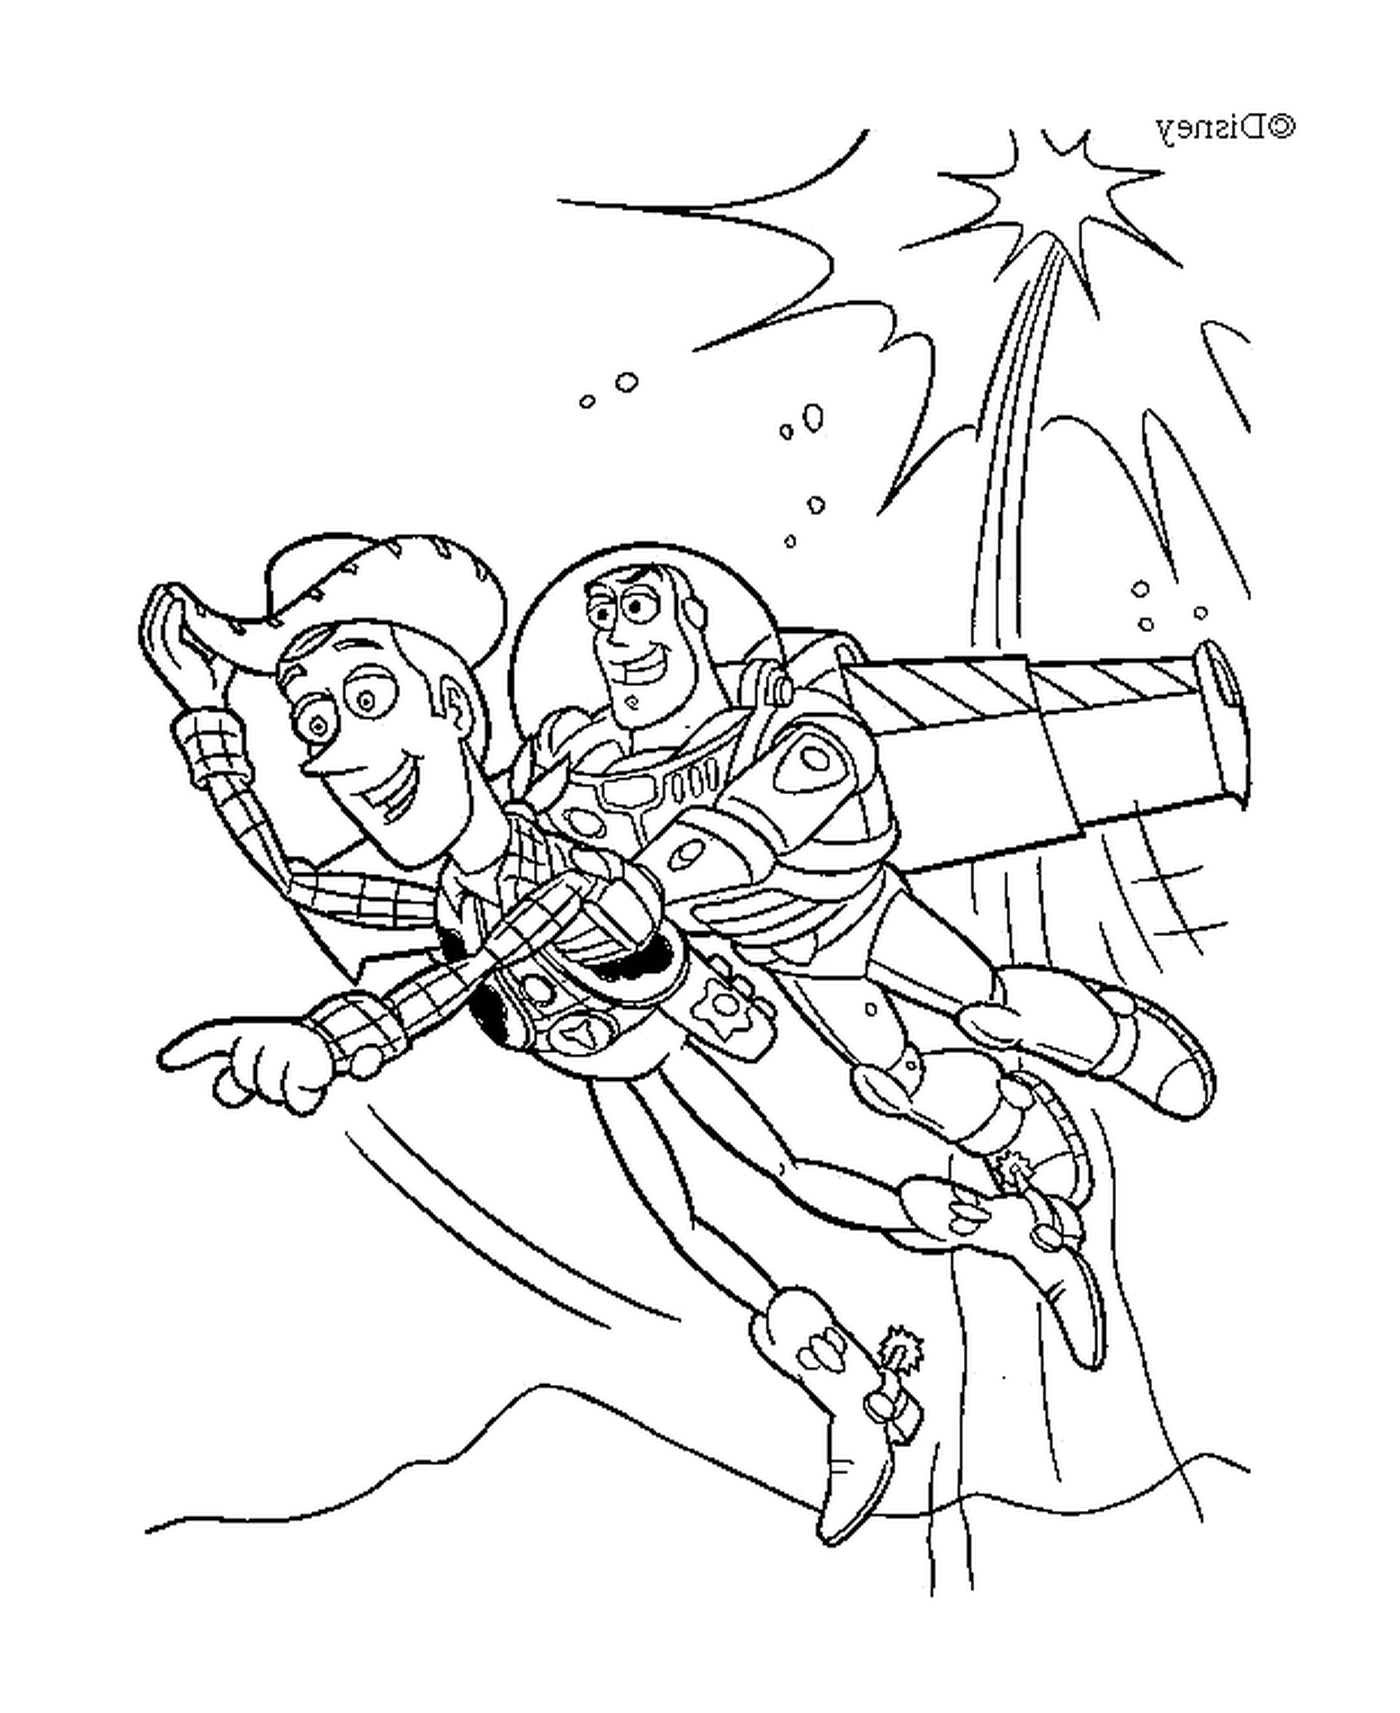  Buzz Light flies with Woody, heroic duo 